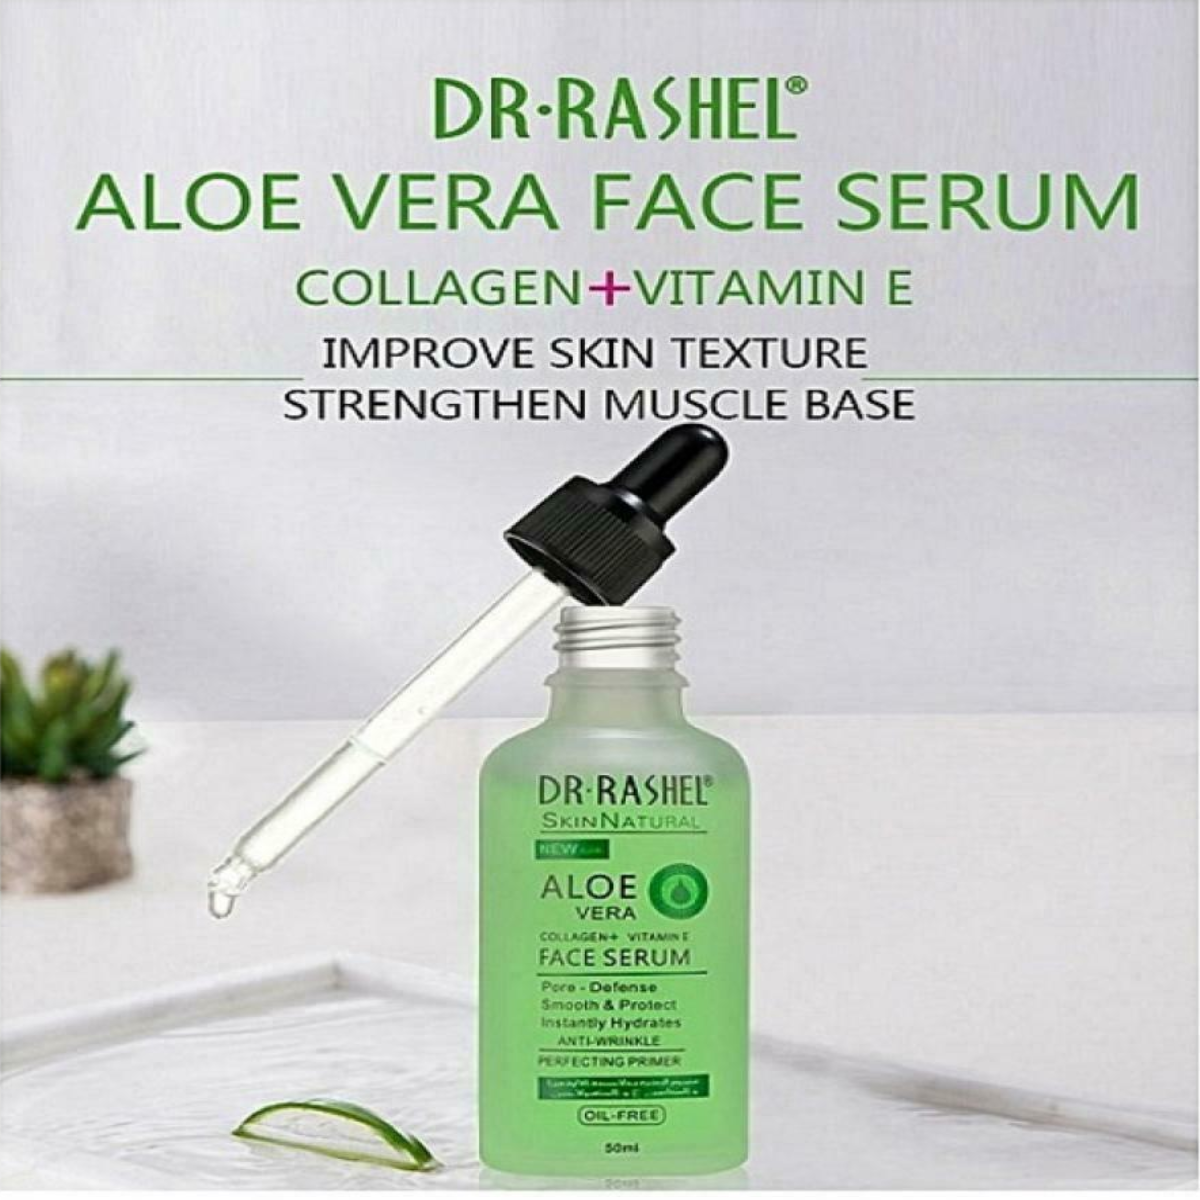 Dr. Rashel Aloe Vera Collagen+Vitamin E Face Serum Perfecting Primer